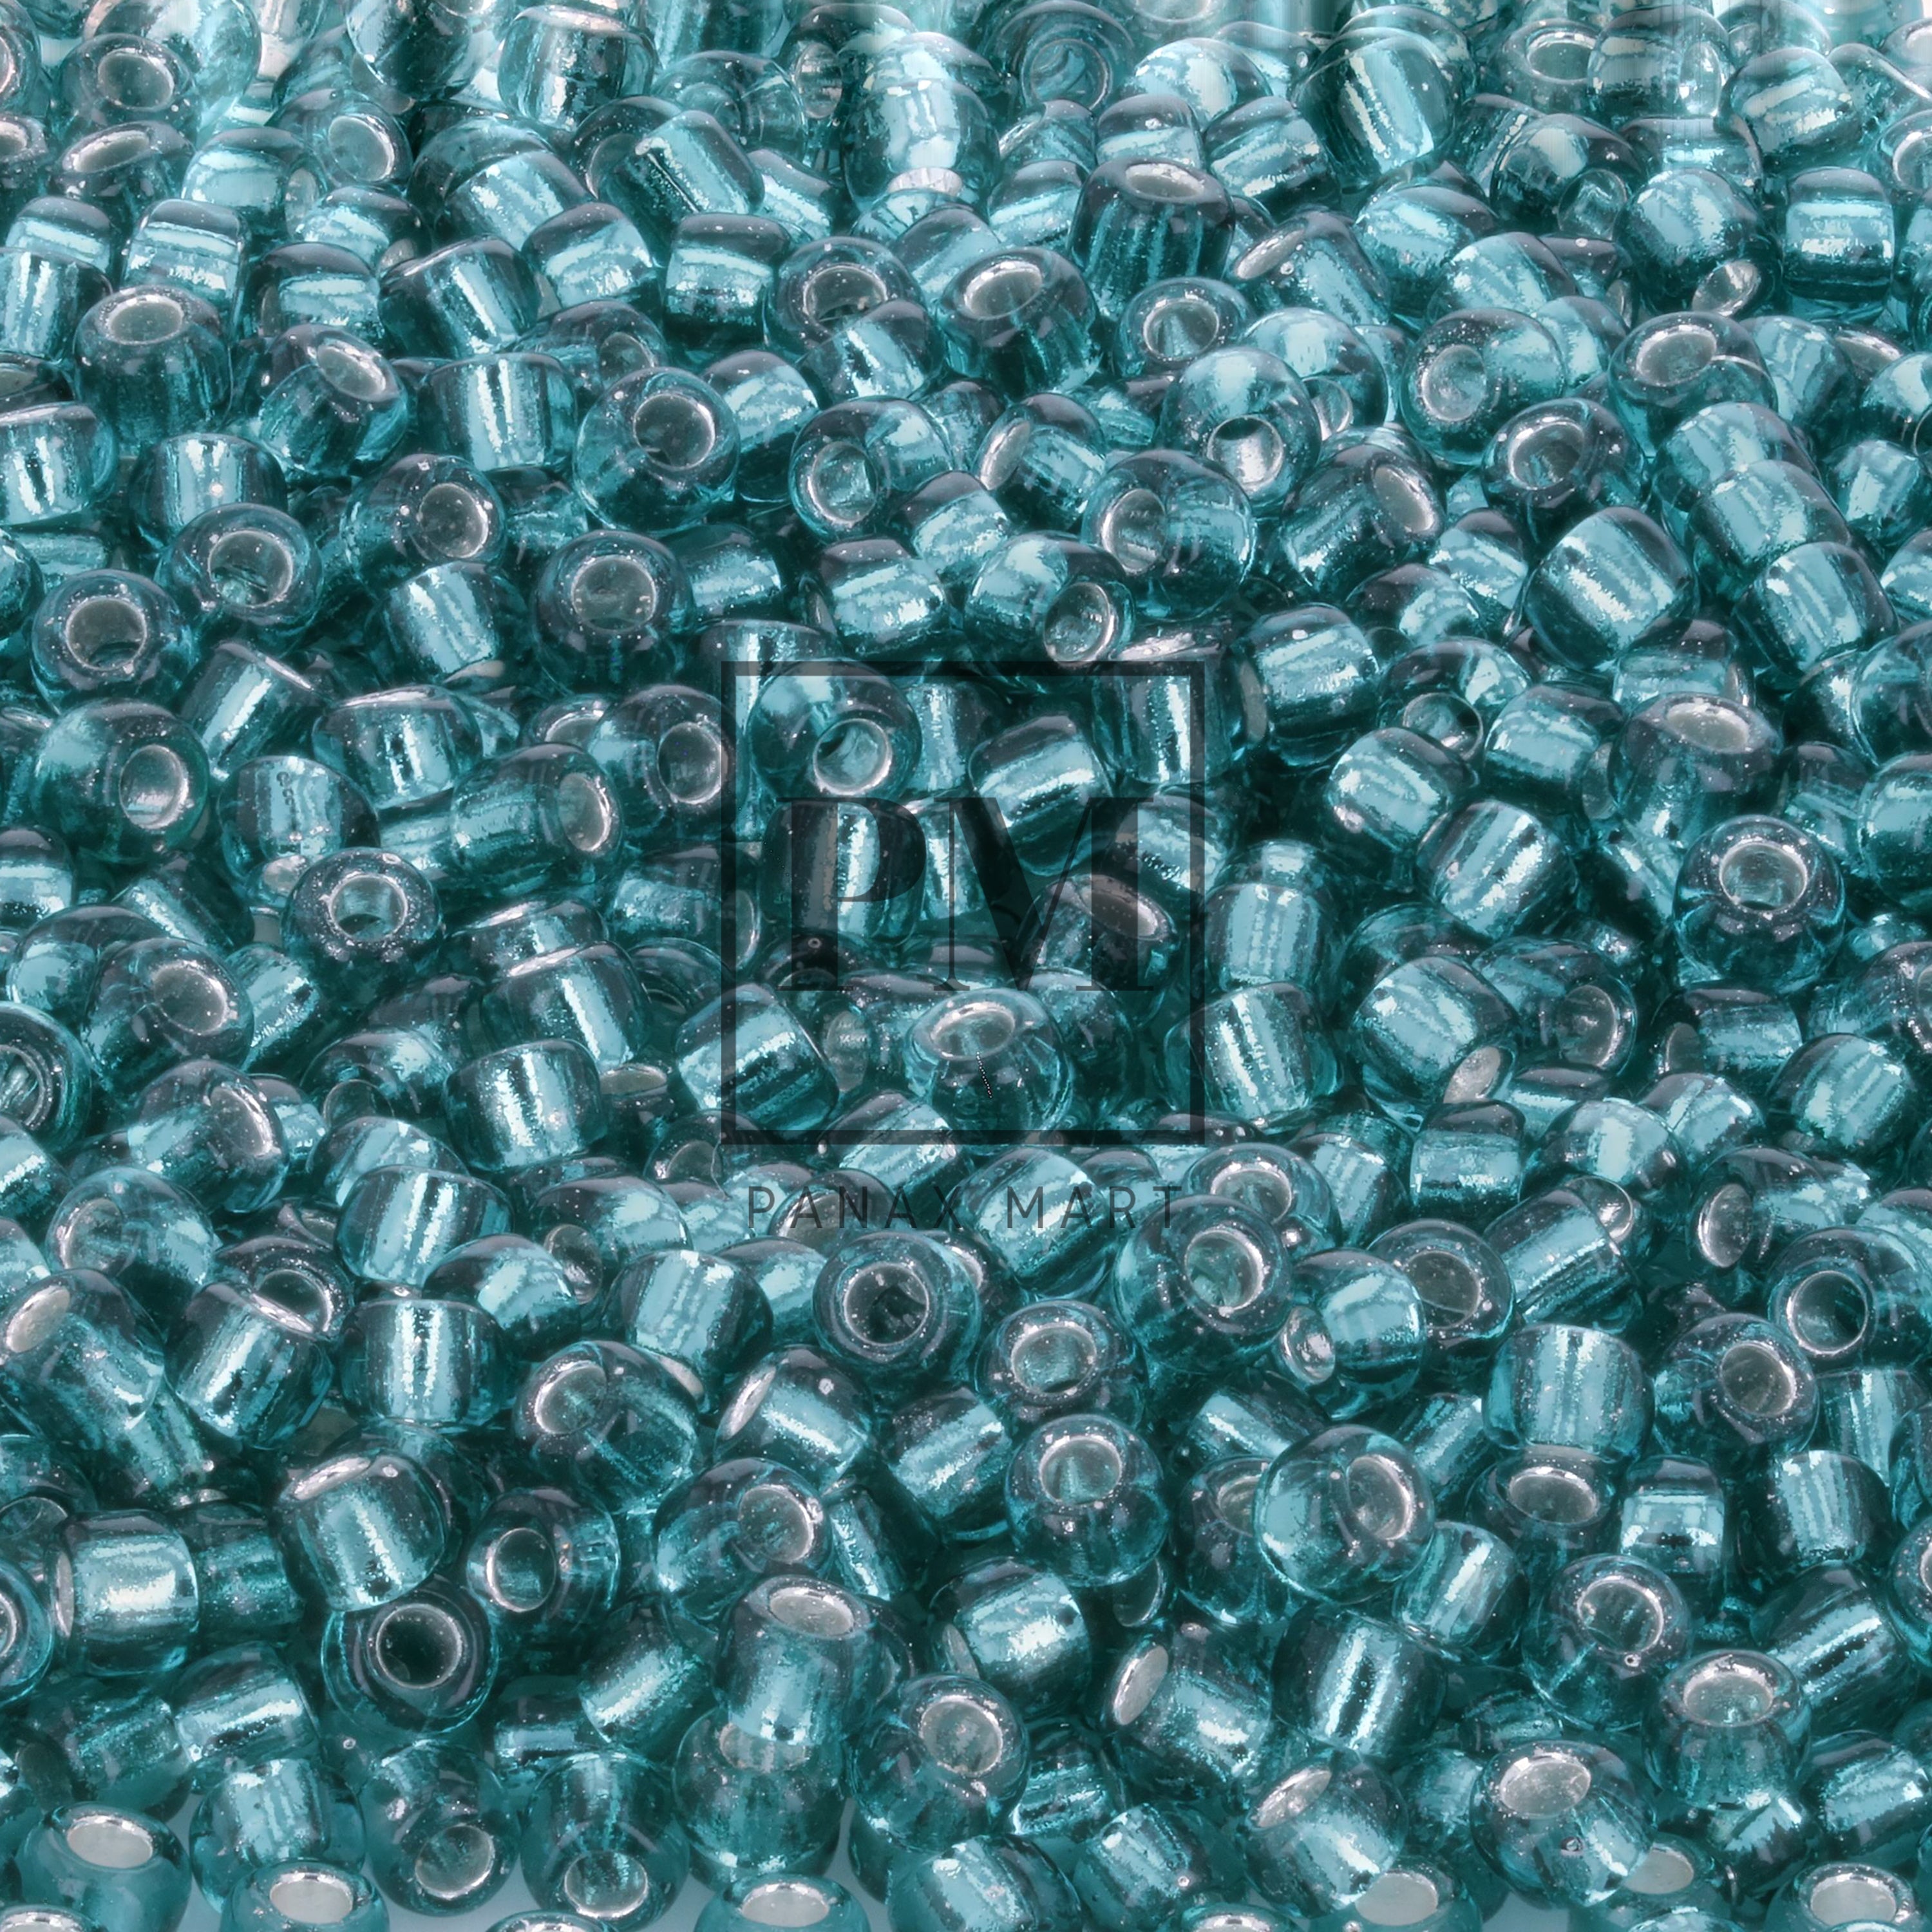 Matsuno Glass Beads (MGB) 11/0 RR 51 - Panax Mart